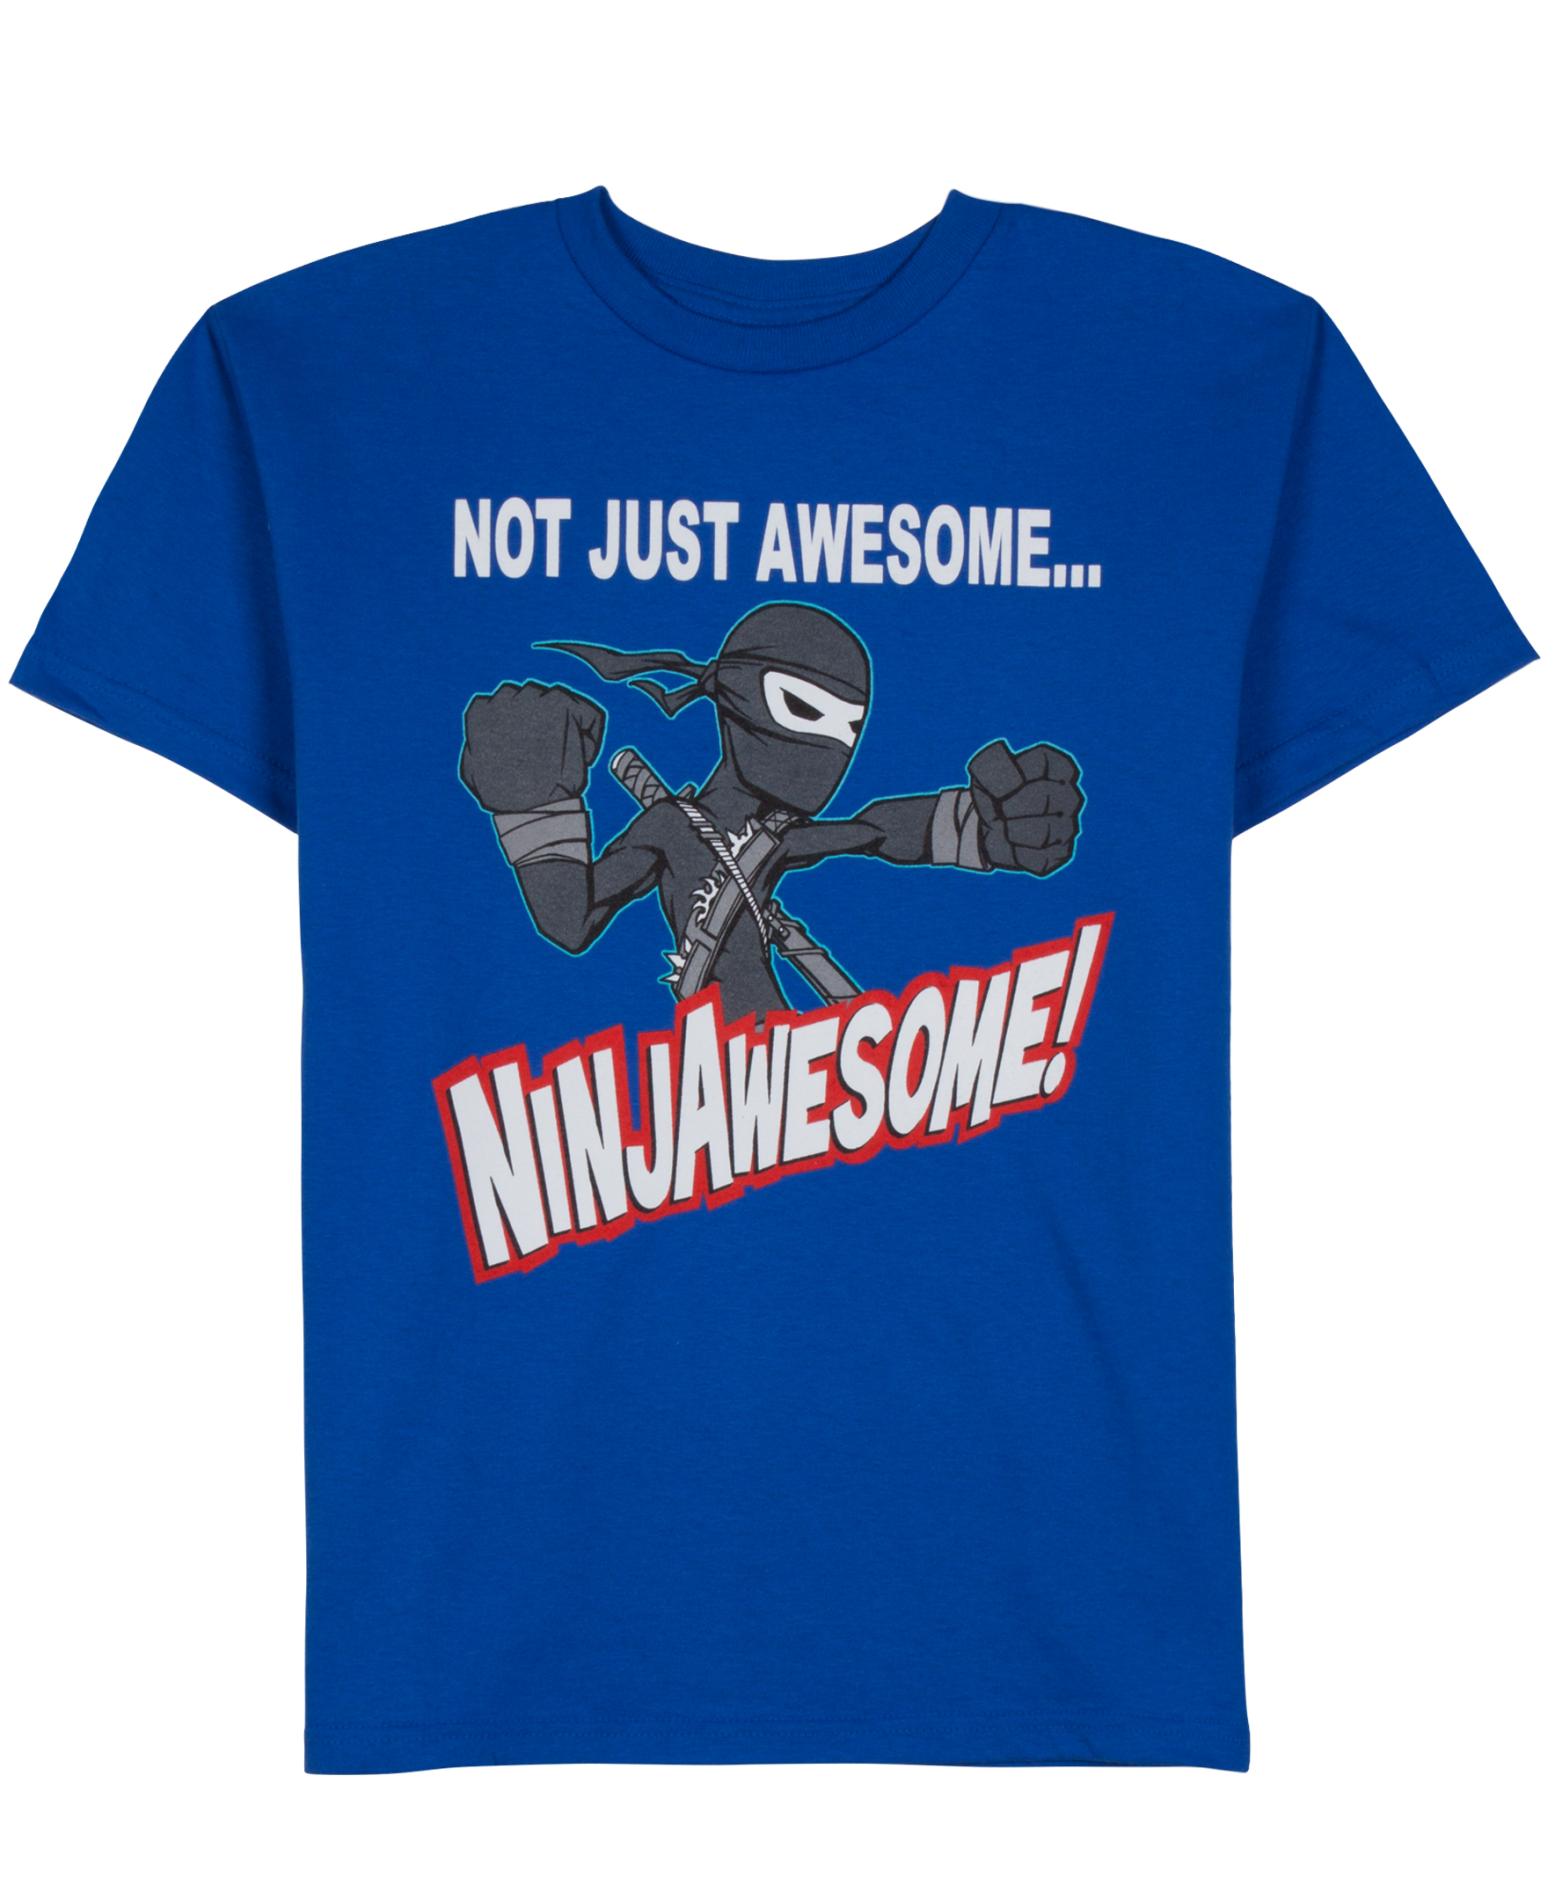 Route 66 Boy's Graphic T-Shirt - Ninja